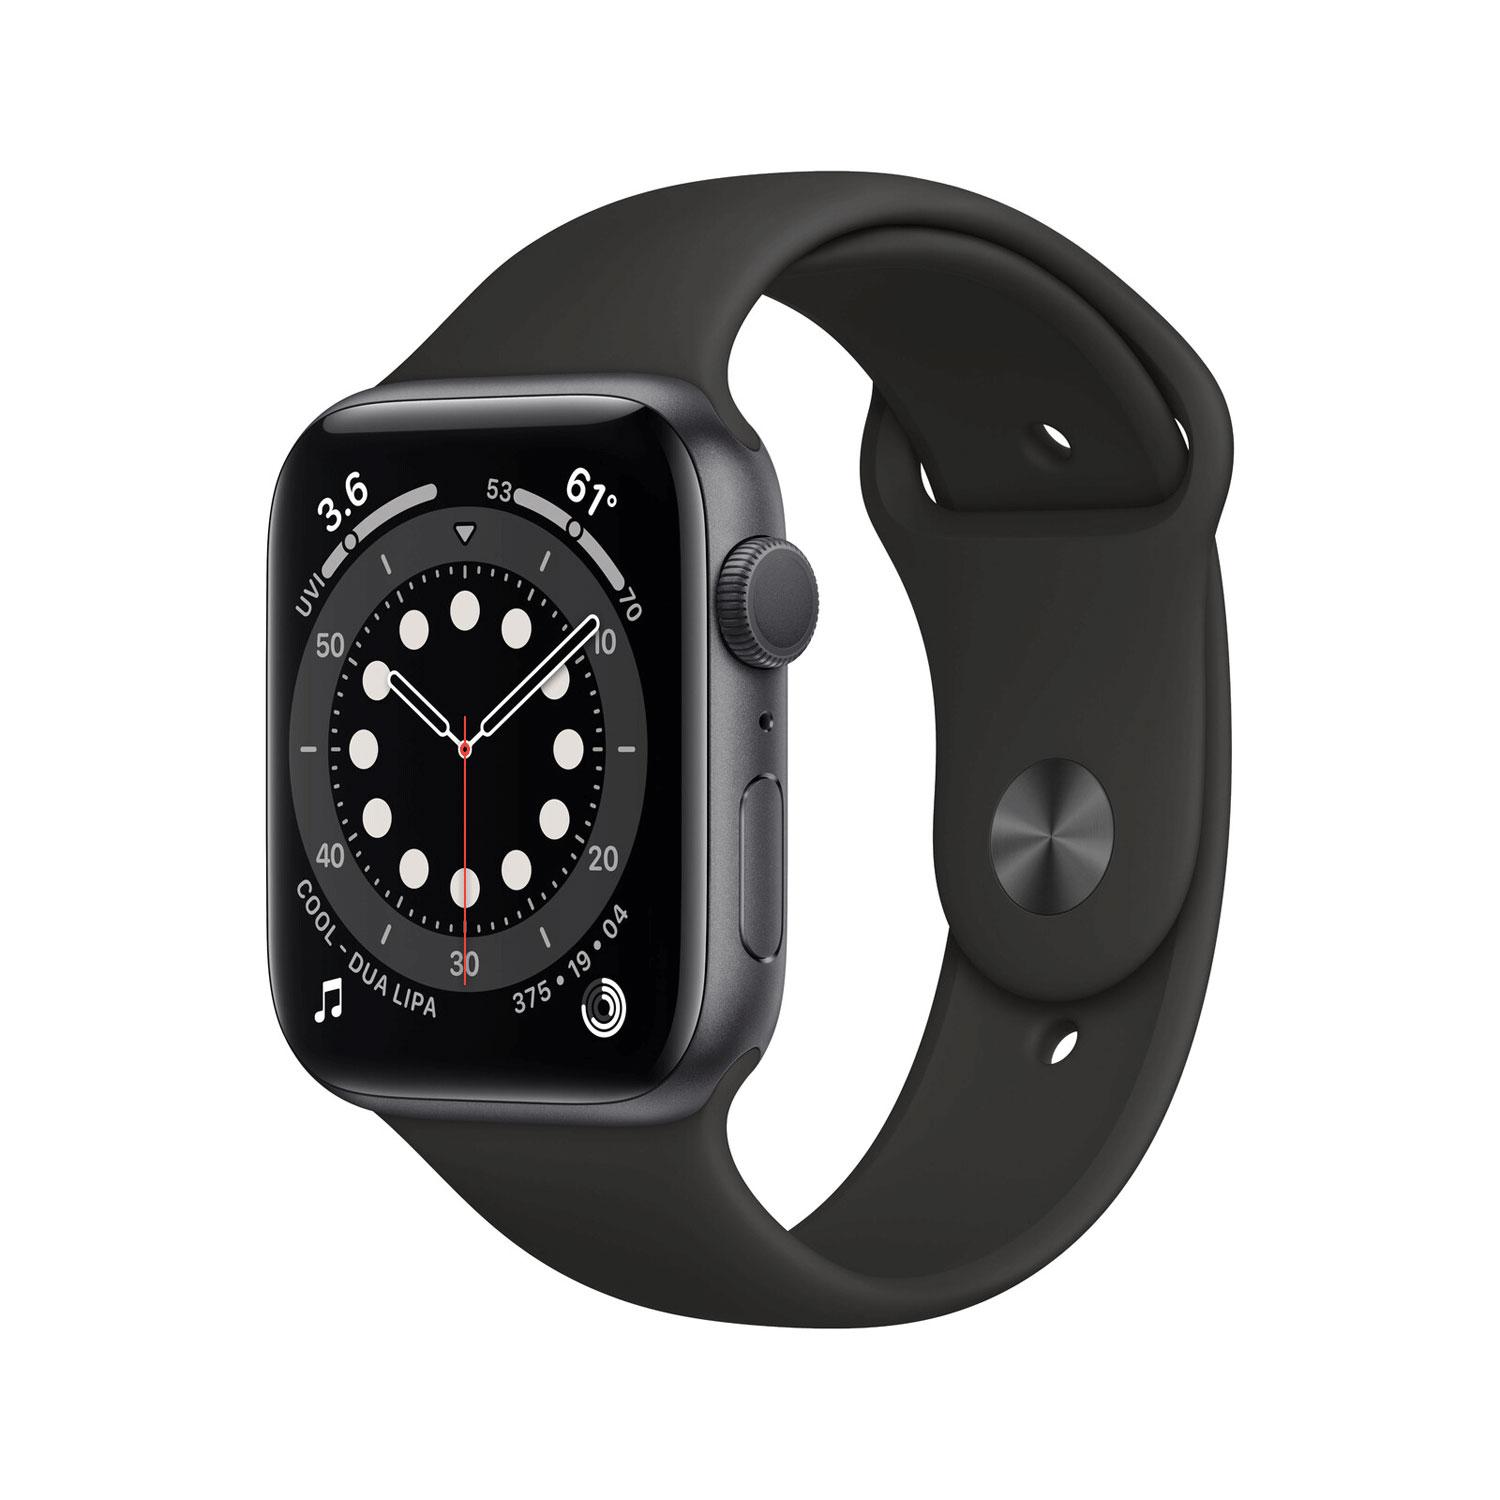 Apple Watch Series 6 Cellular Alu space grau 44mm schwarz